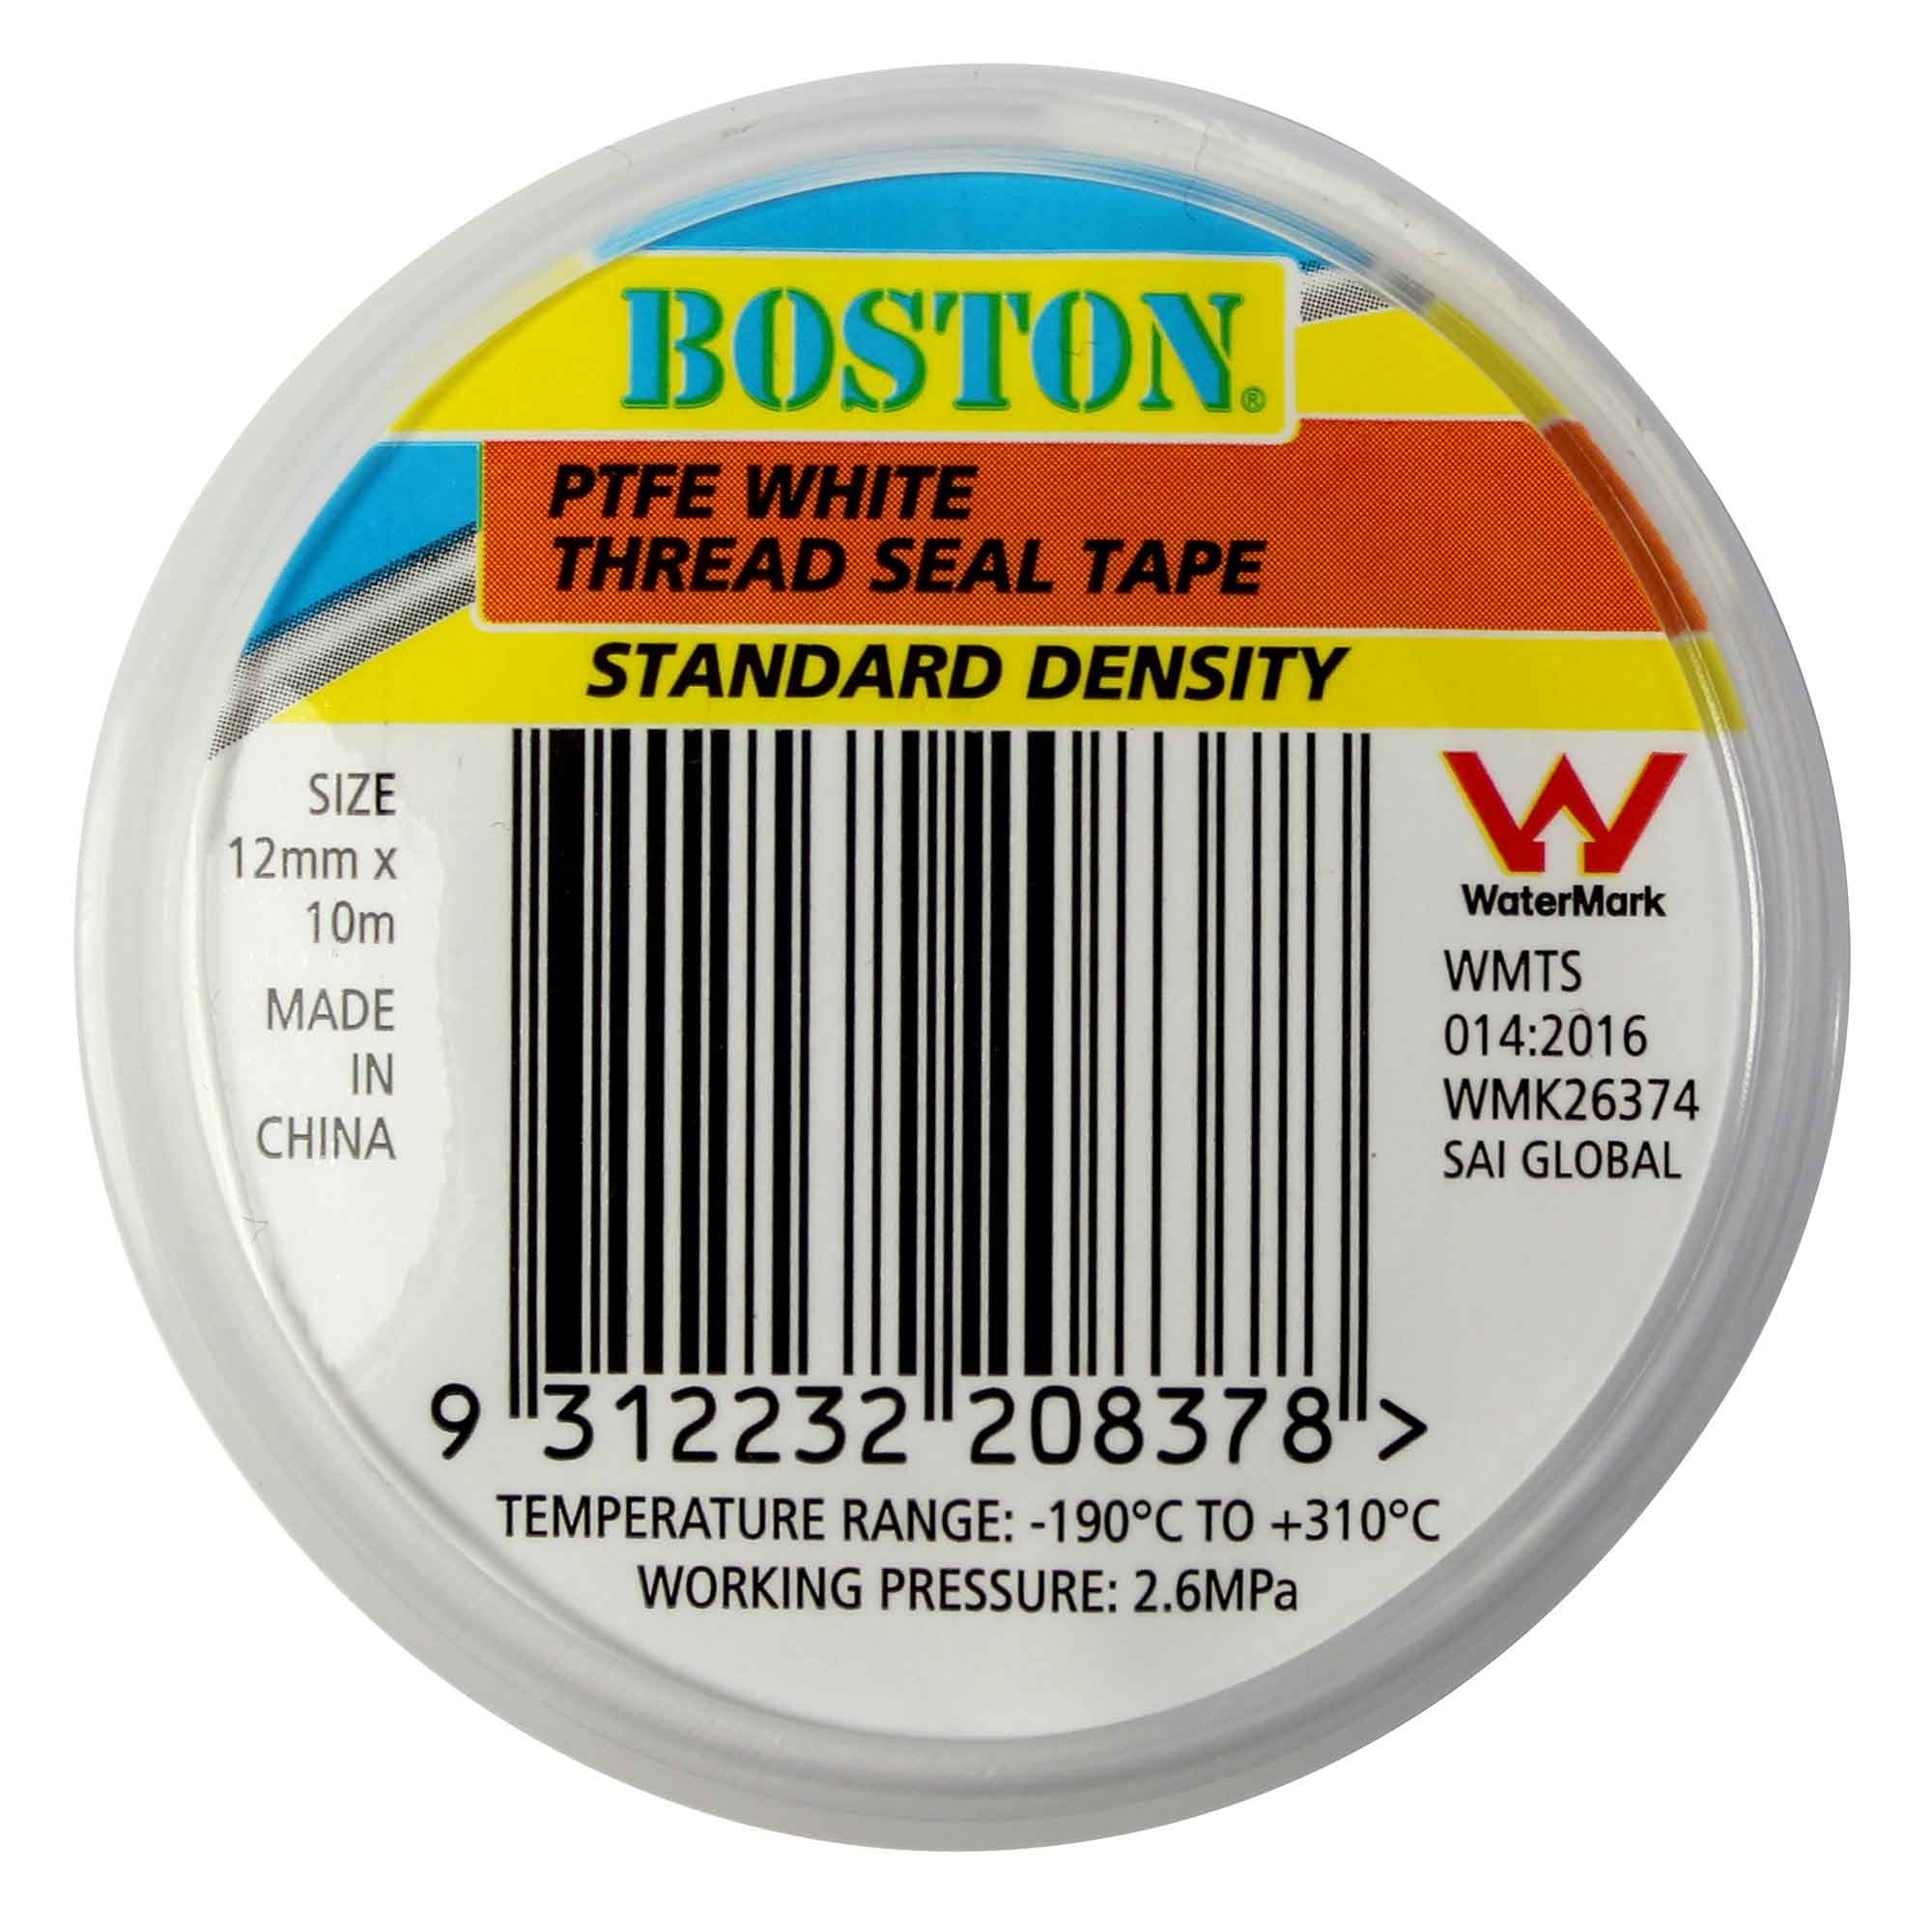 BOSTON High Grade PTFE Threadseal Plumber Tape 12mmX10m Premium White 208378 - DoubleBayHardware